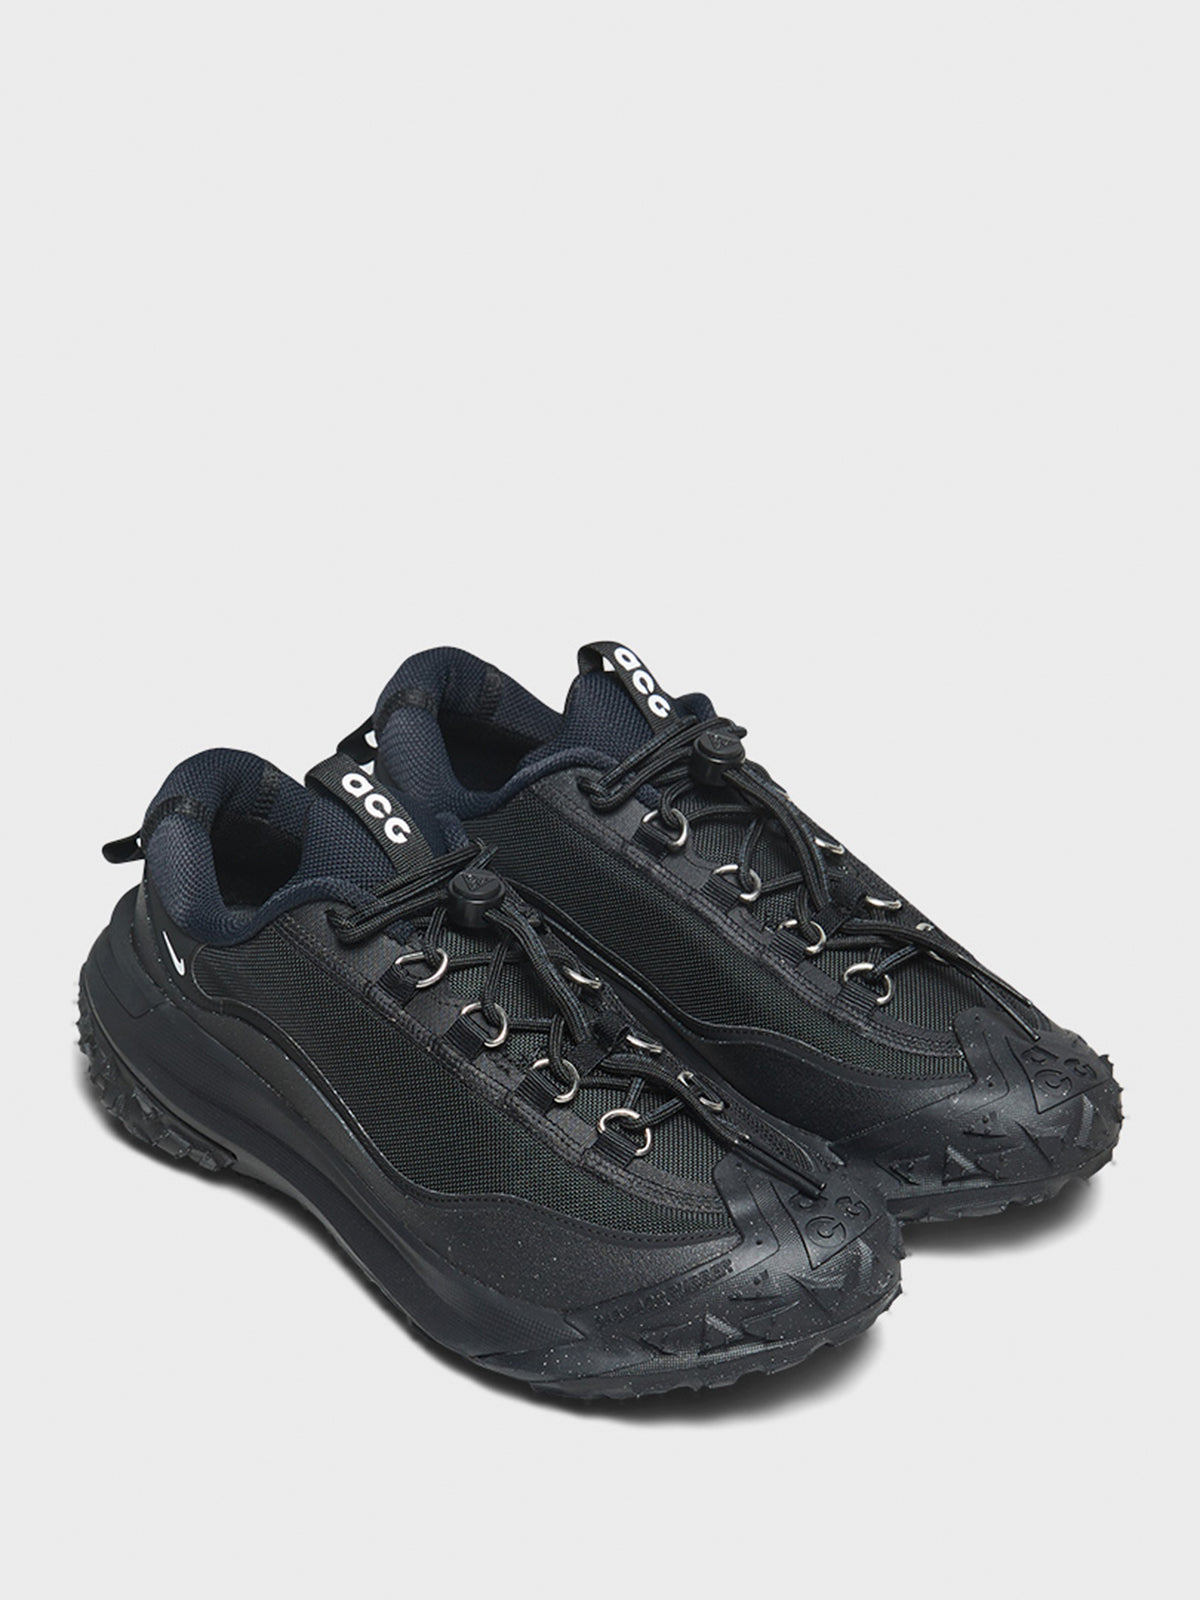 Comme des Garçons Homme Plus x Nike ACG Mountain Sneakers in Black